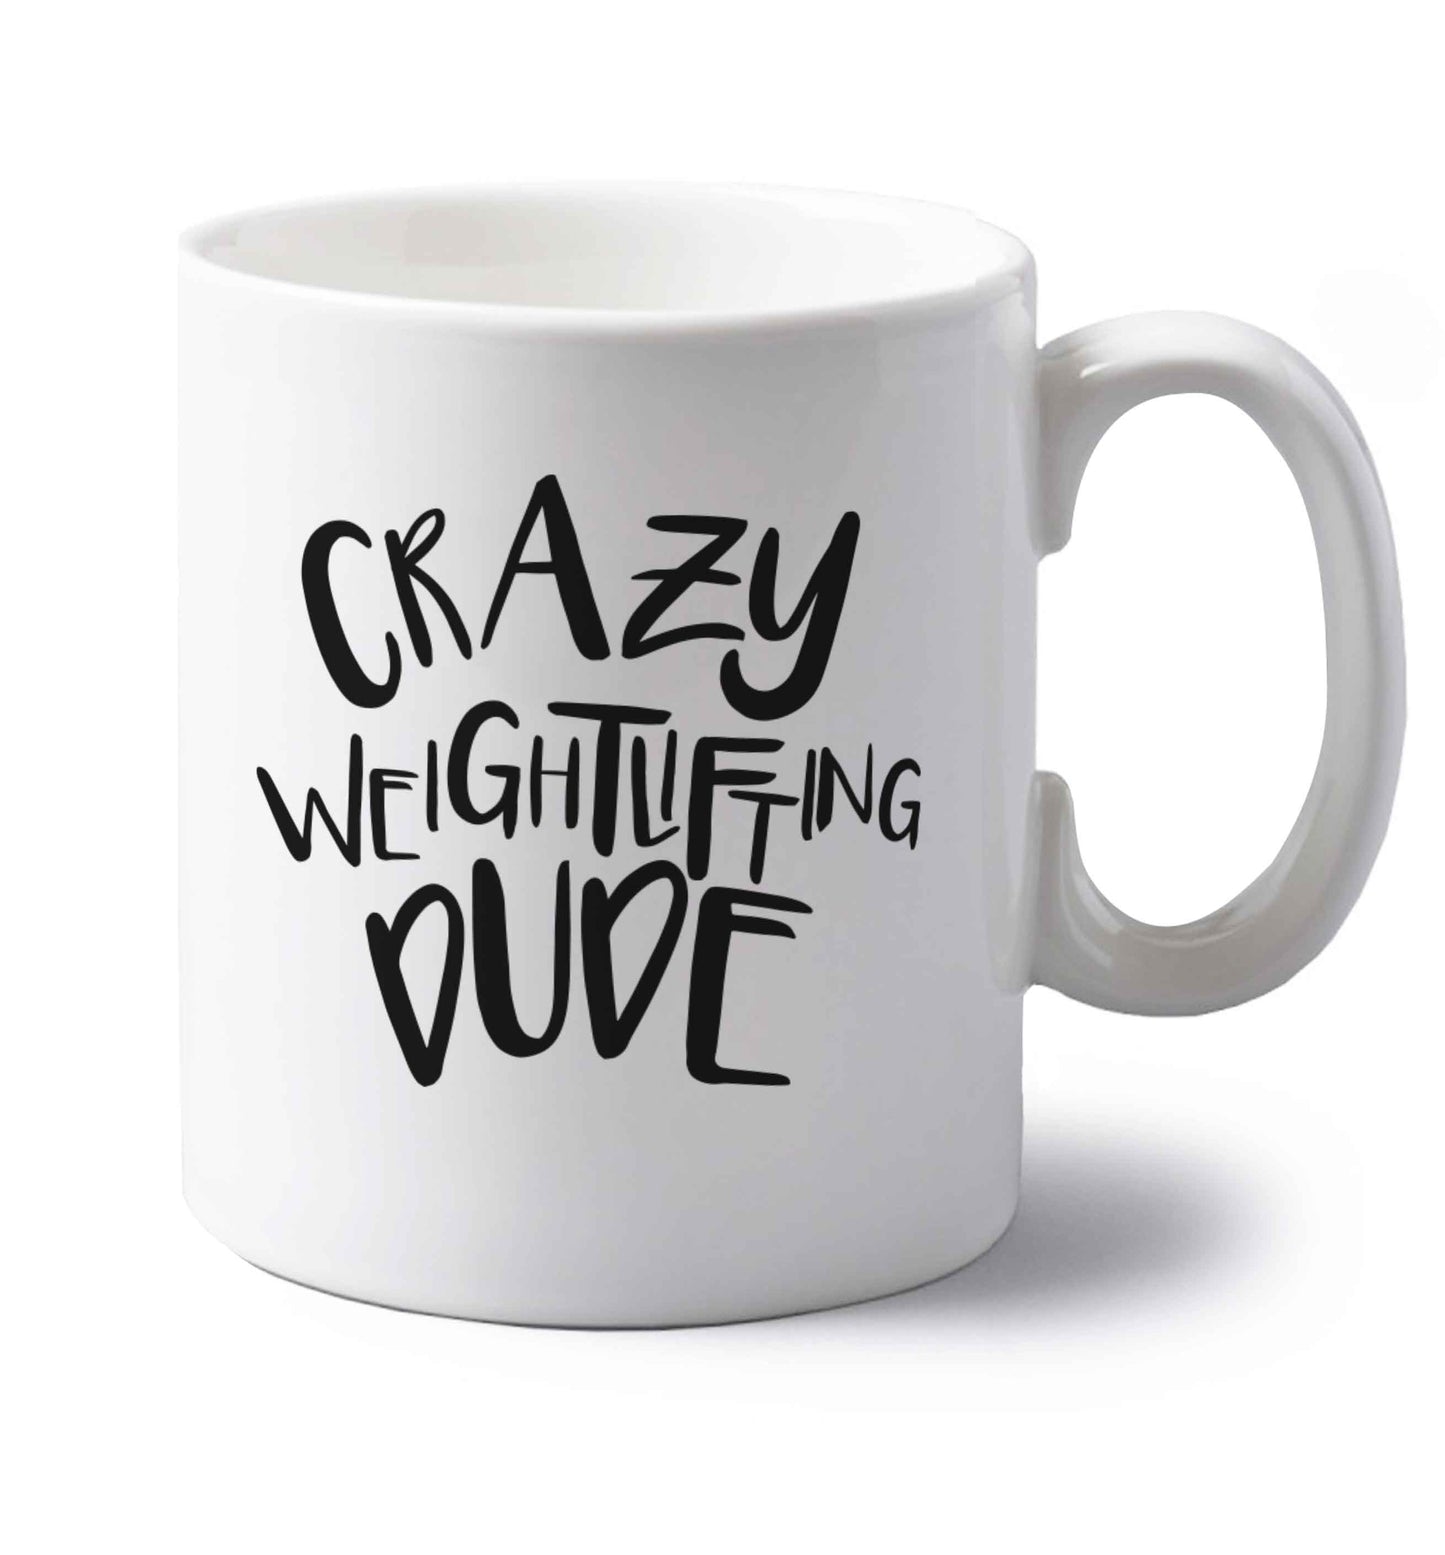 Crazy weightlifting dude left handed white ceramic mug 